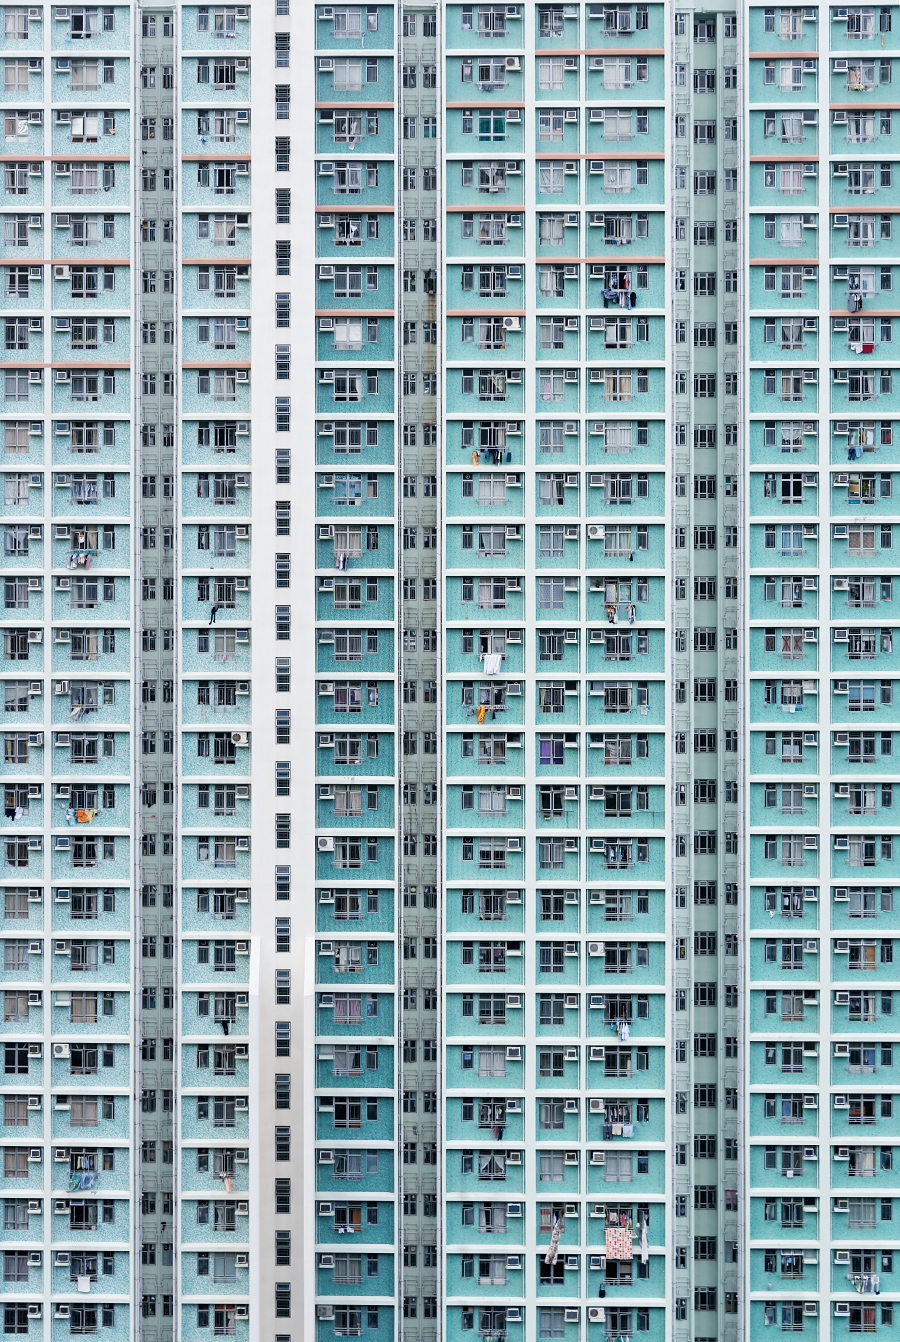 hongkong kowloon density concrete buildings human